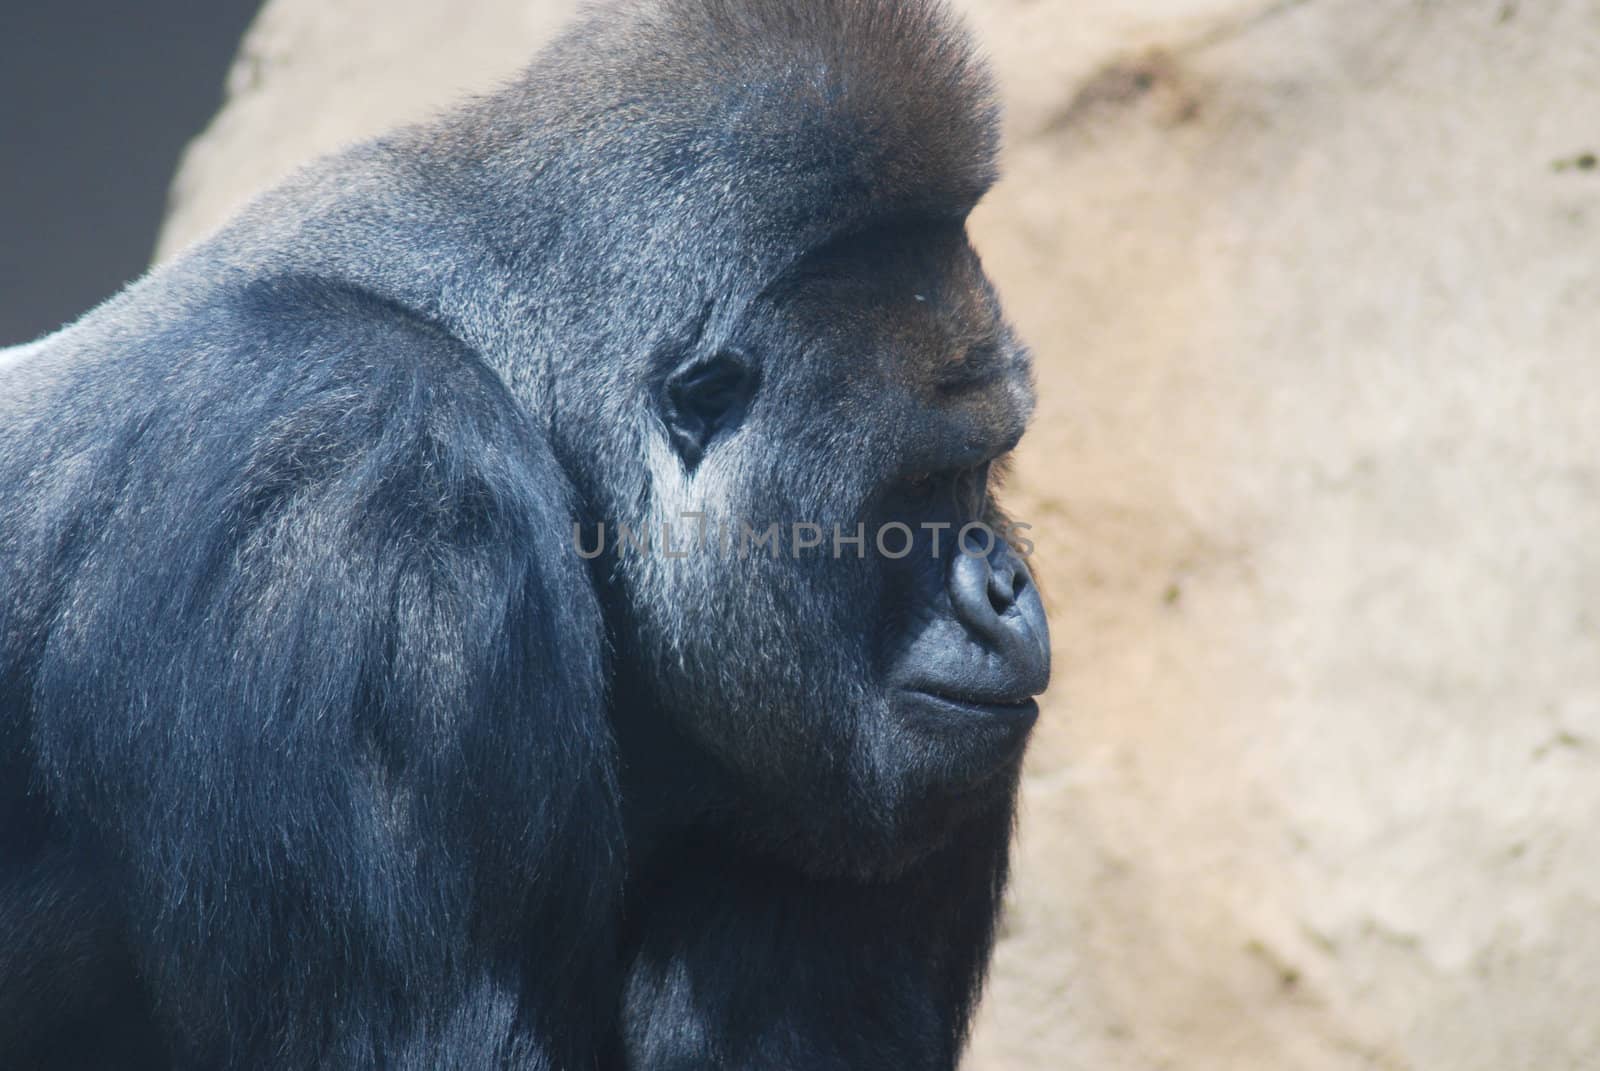 close-up of a big black hairy gorilla 